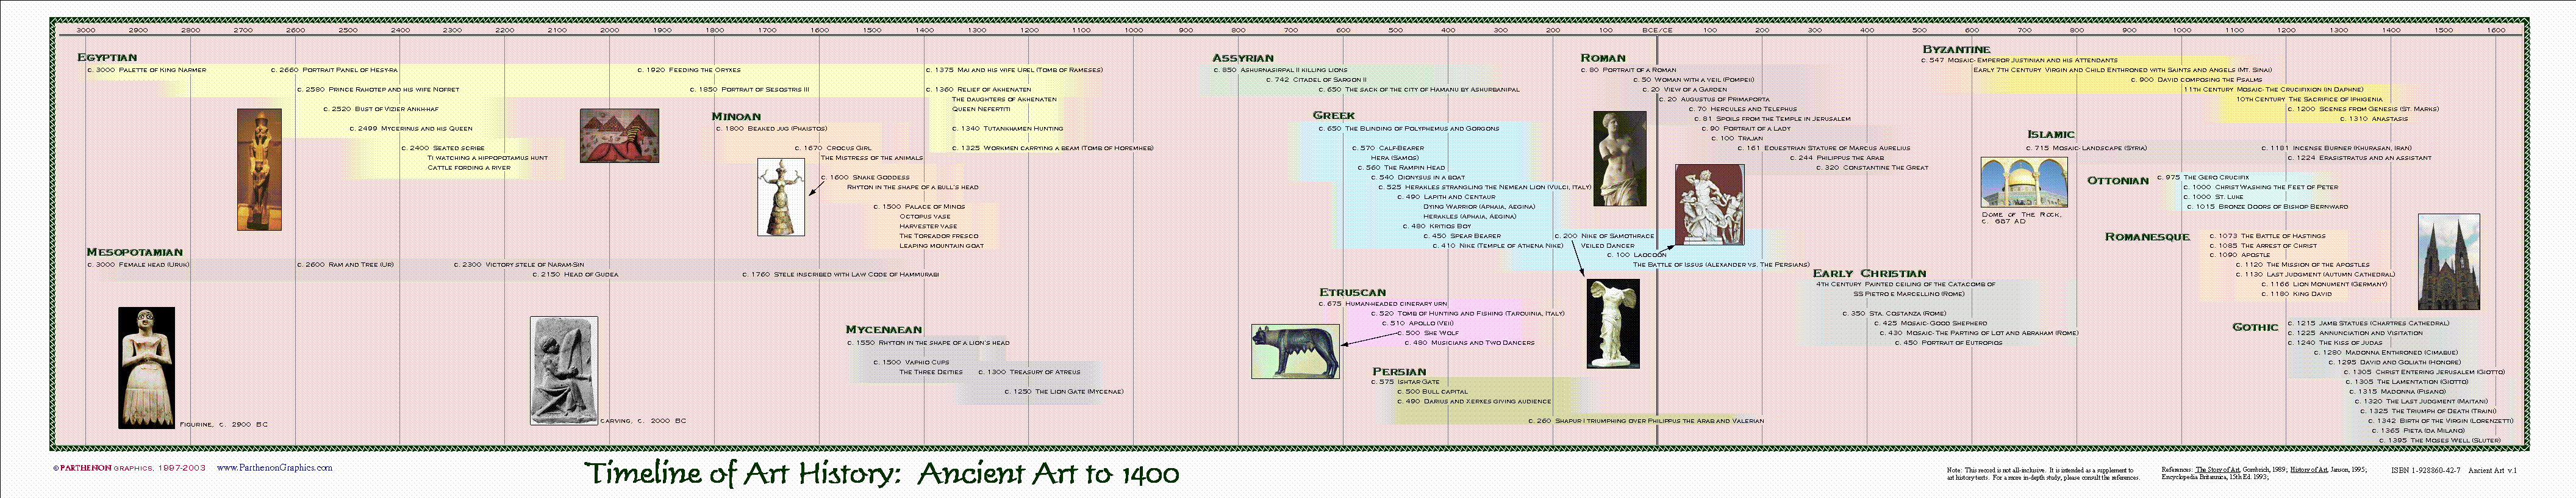 Art History Timeline Project